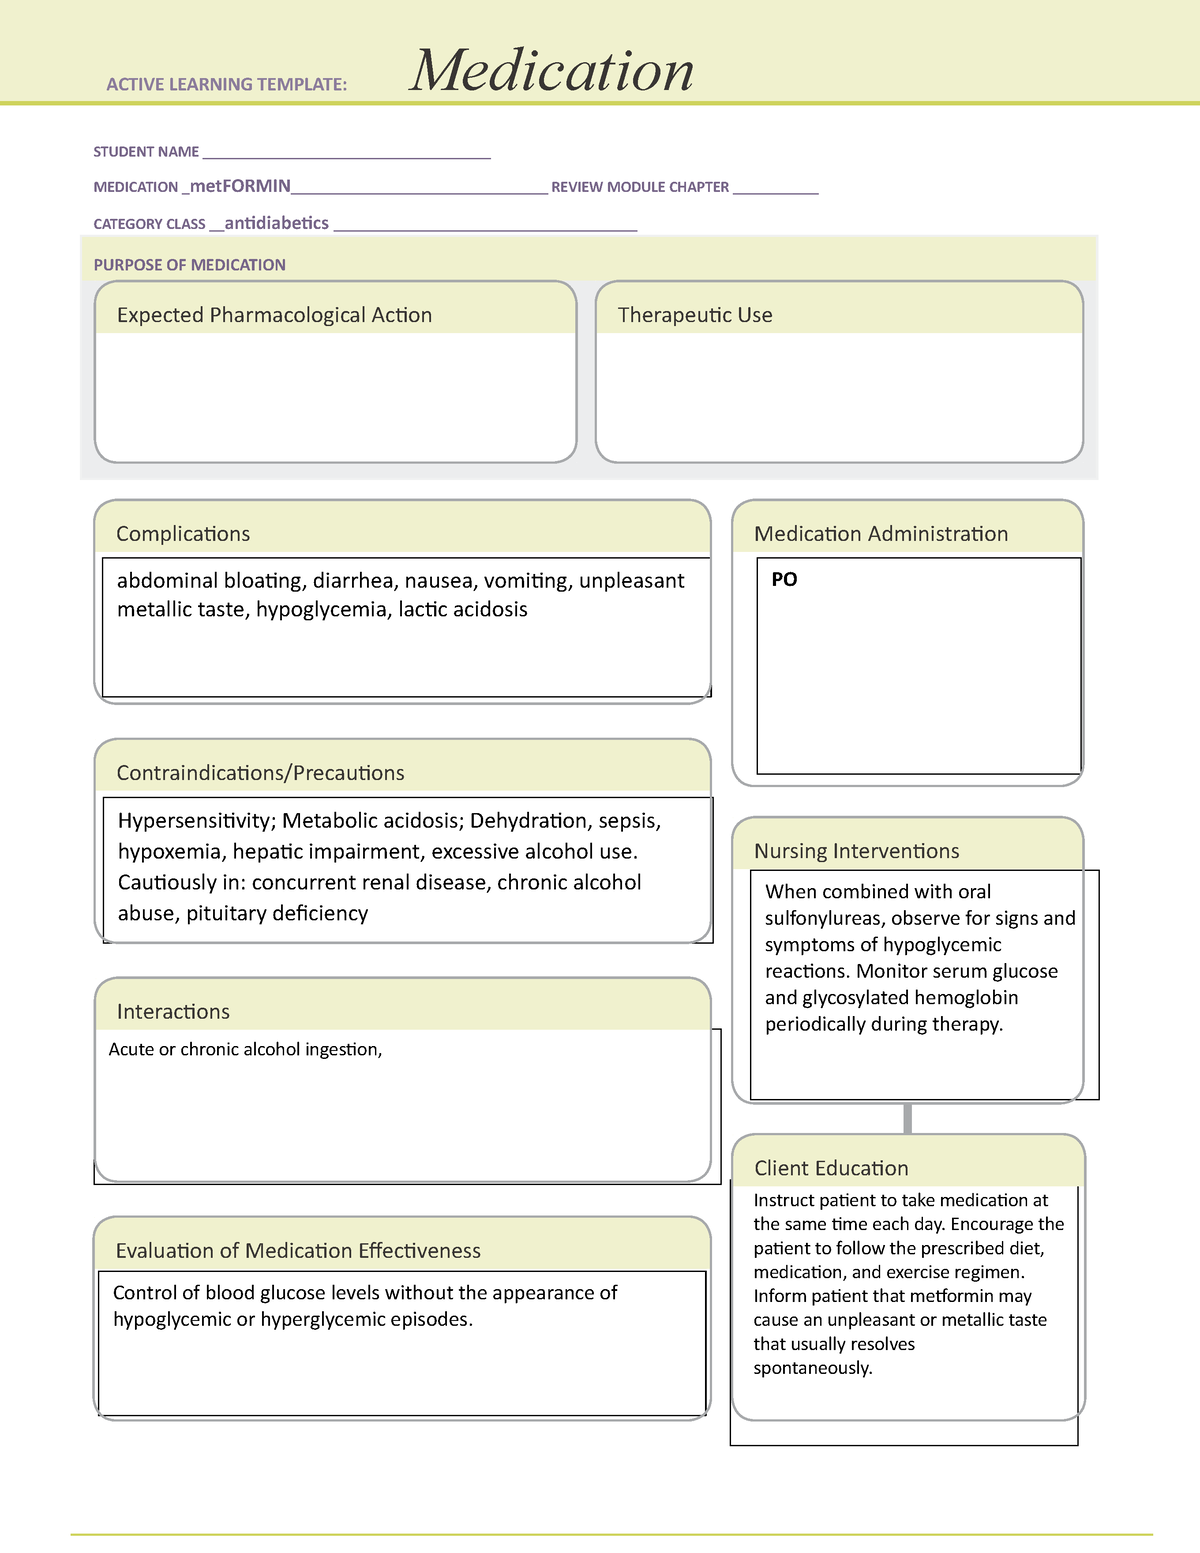 metformin-ati-active-learning-template-medication-template-nur-211